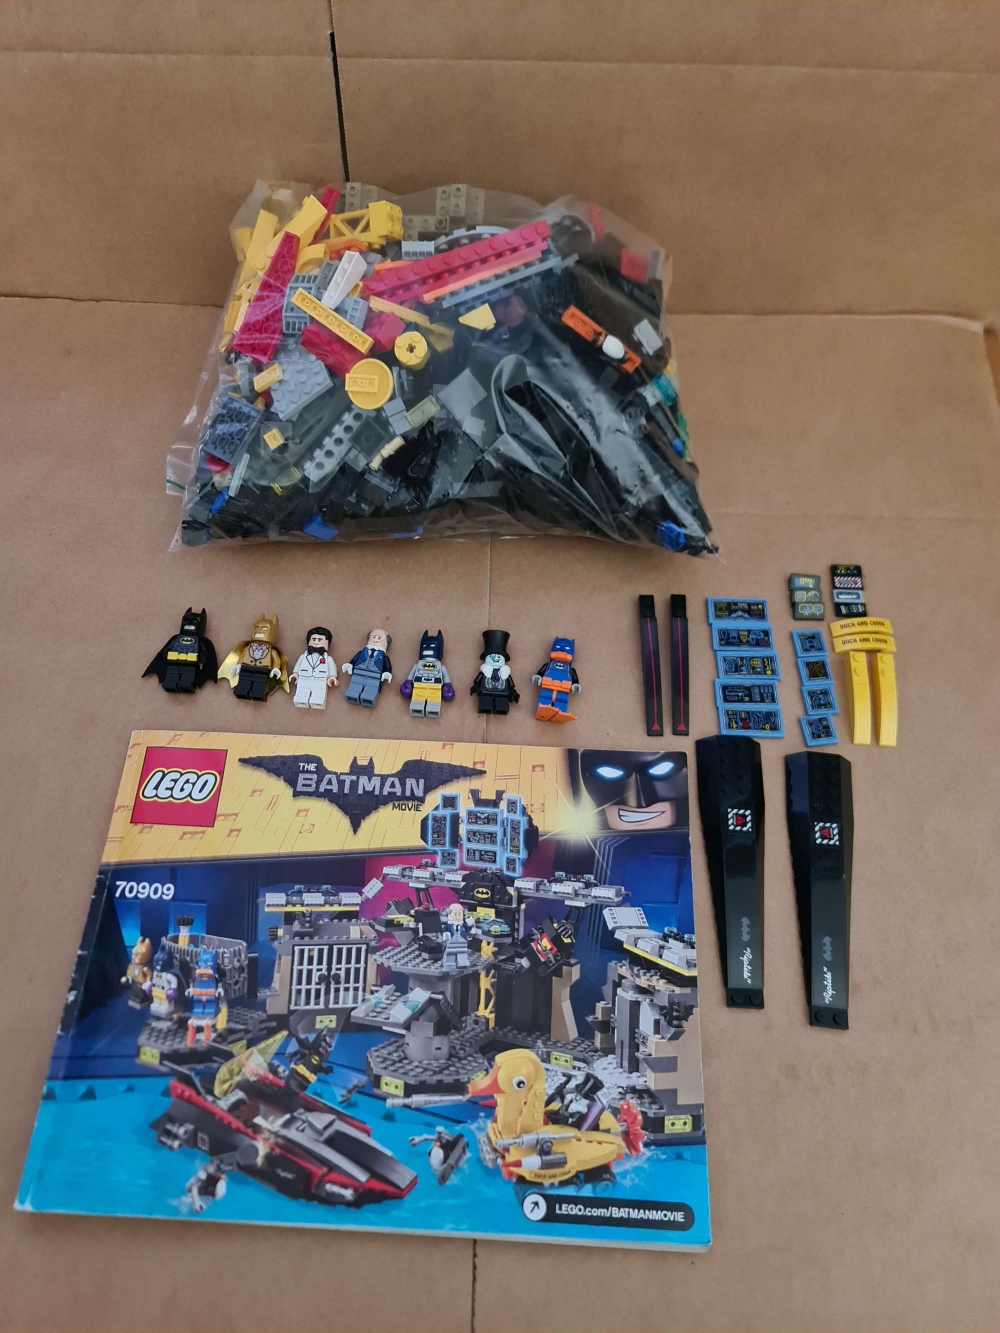 Sett 70909 fra Lego Super Heroes : The Lego Batman Movie serien.
Meget pent.
Komplett med manual.